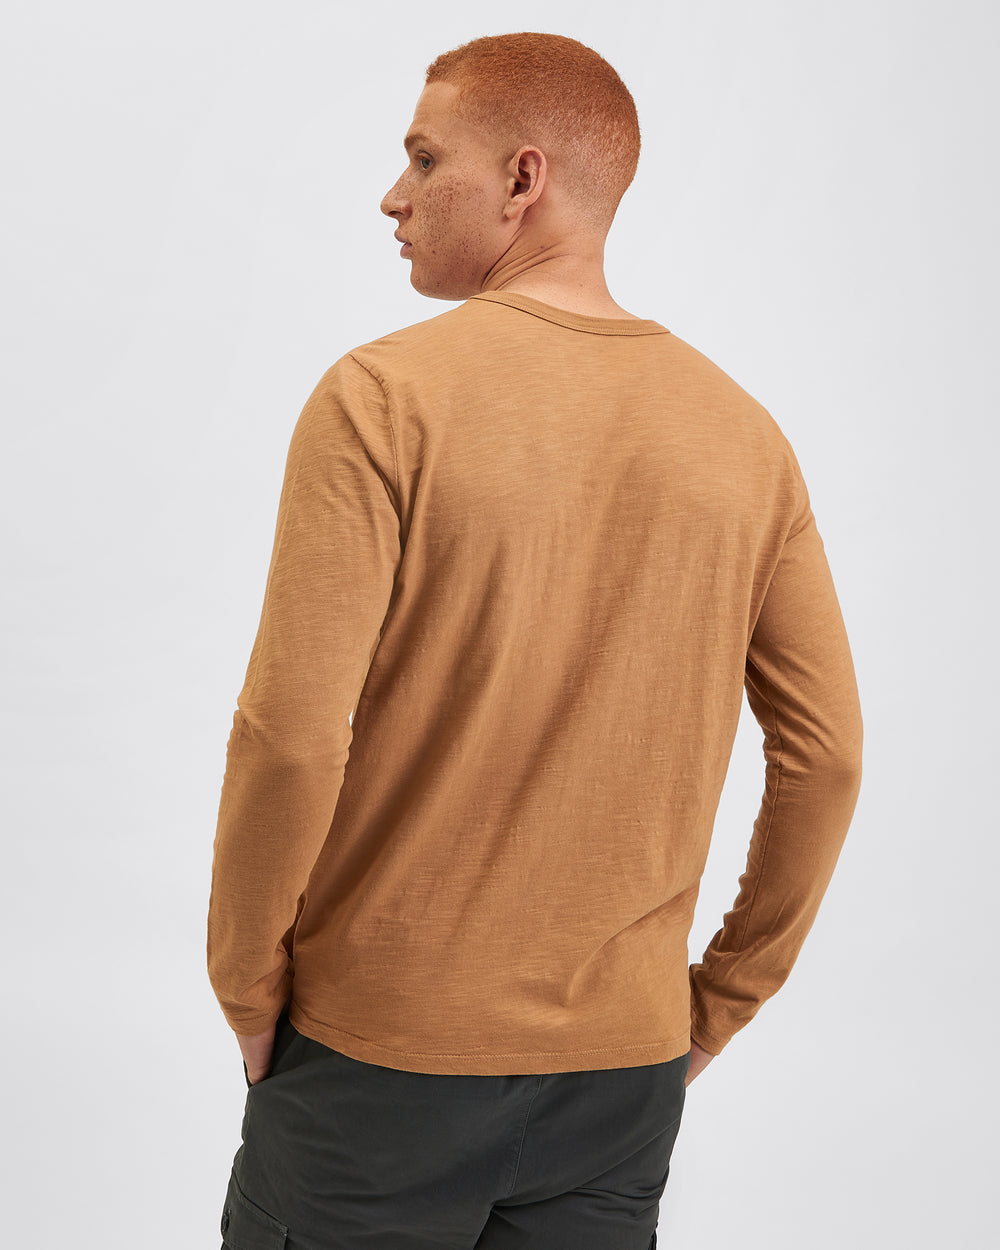 Garment Dye Beatnik Long-Sleeve T-Shirt - Camel